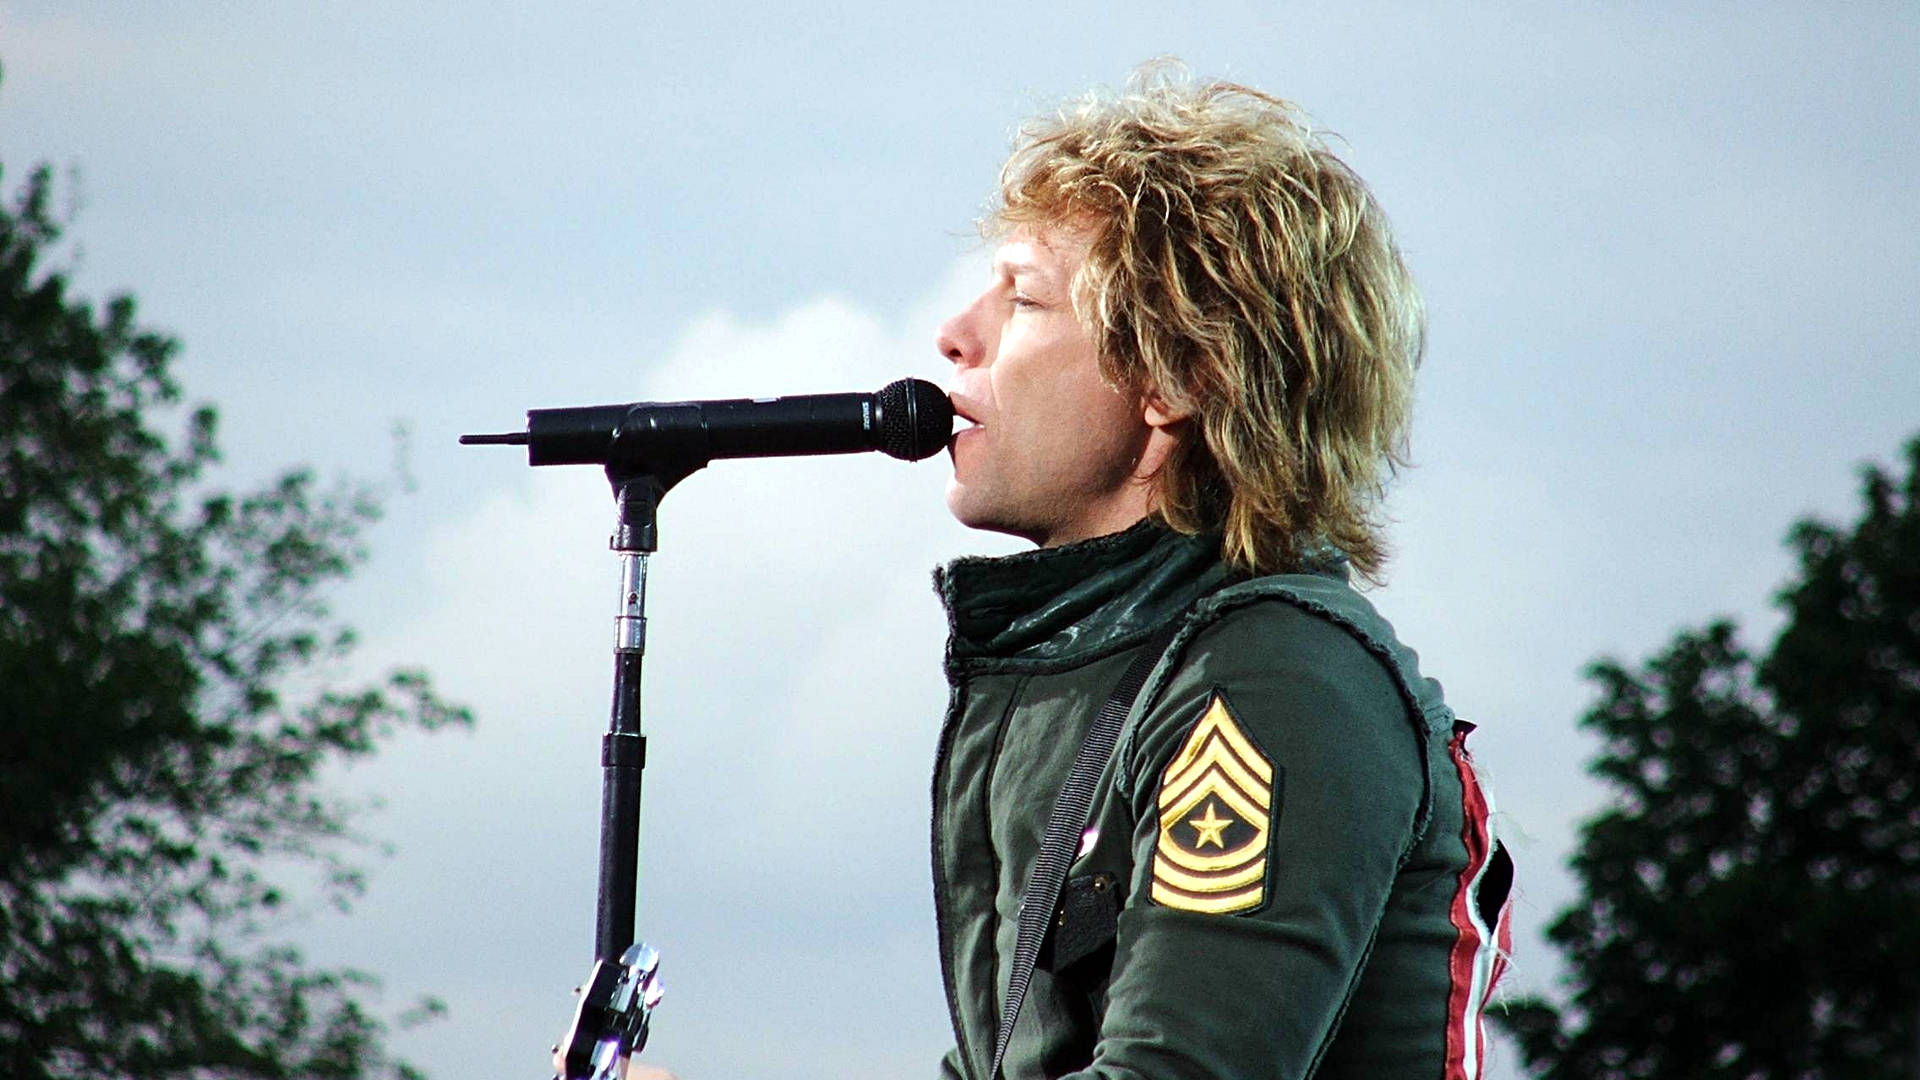 American Singer Jon Bon Jovi 2006 Nijmegen Netherlands Background